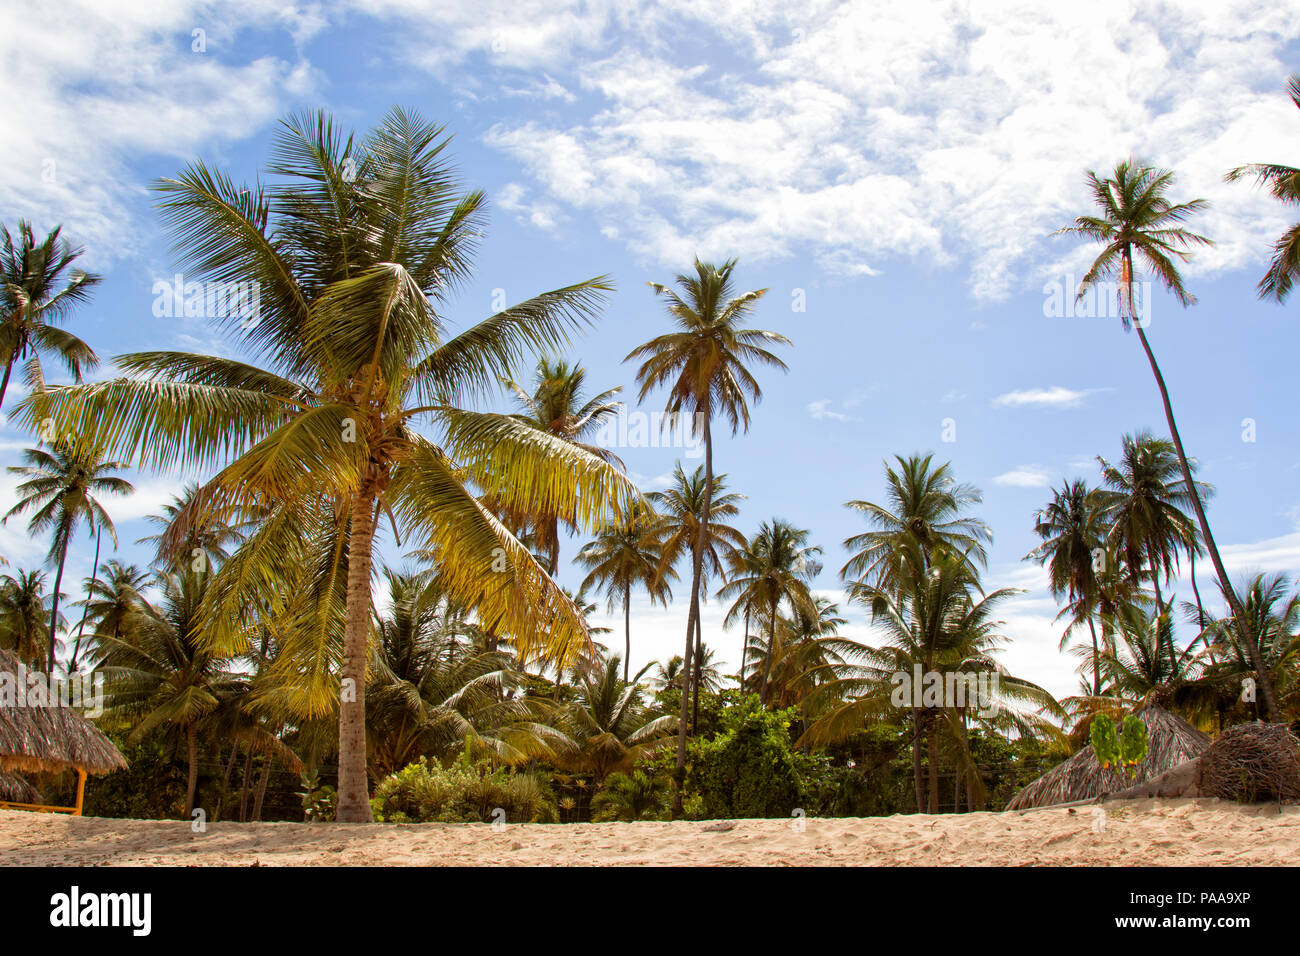 Palm trees on a beach, Tobago, W.I. Coconut trees framing tropical ...